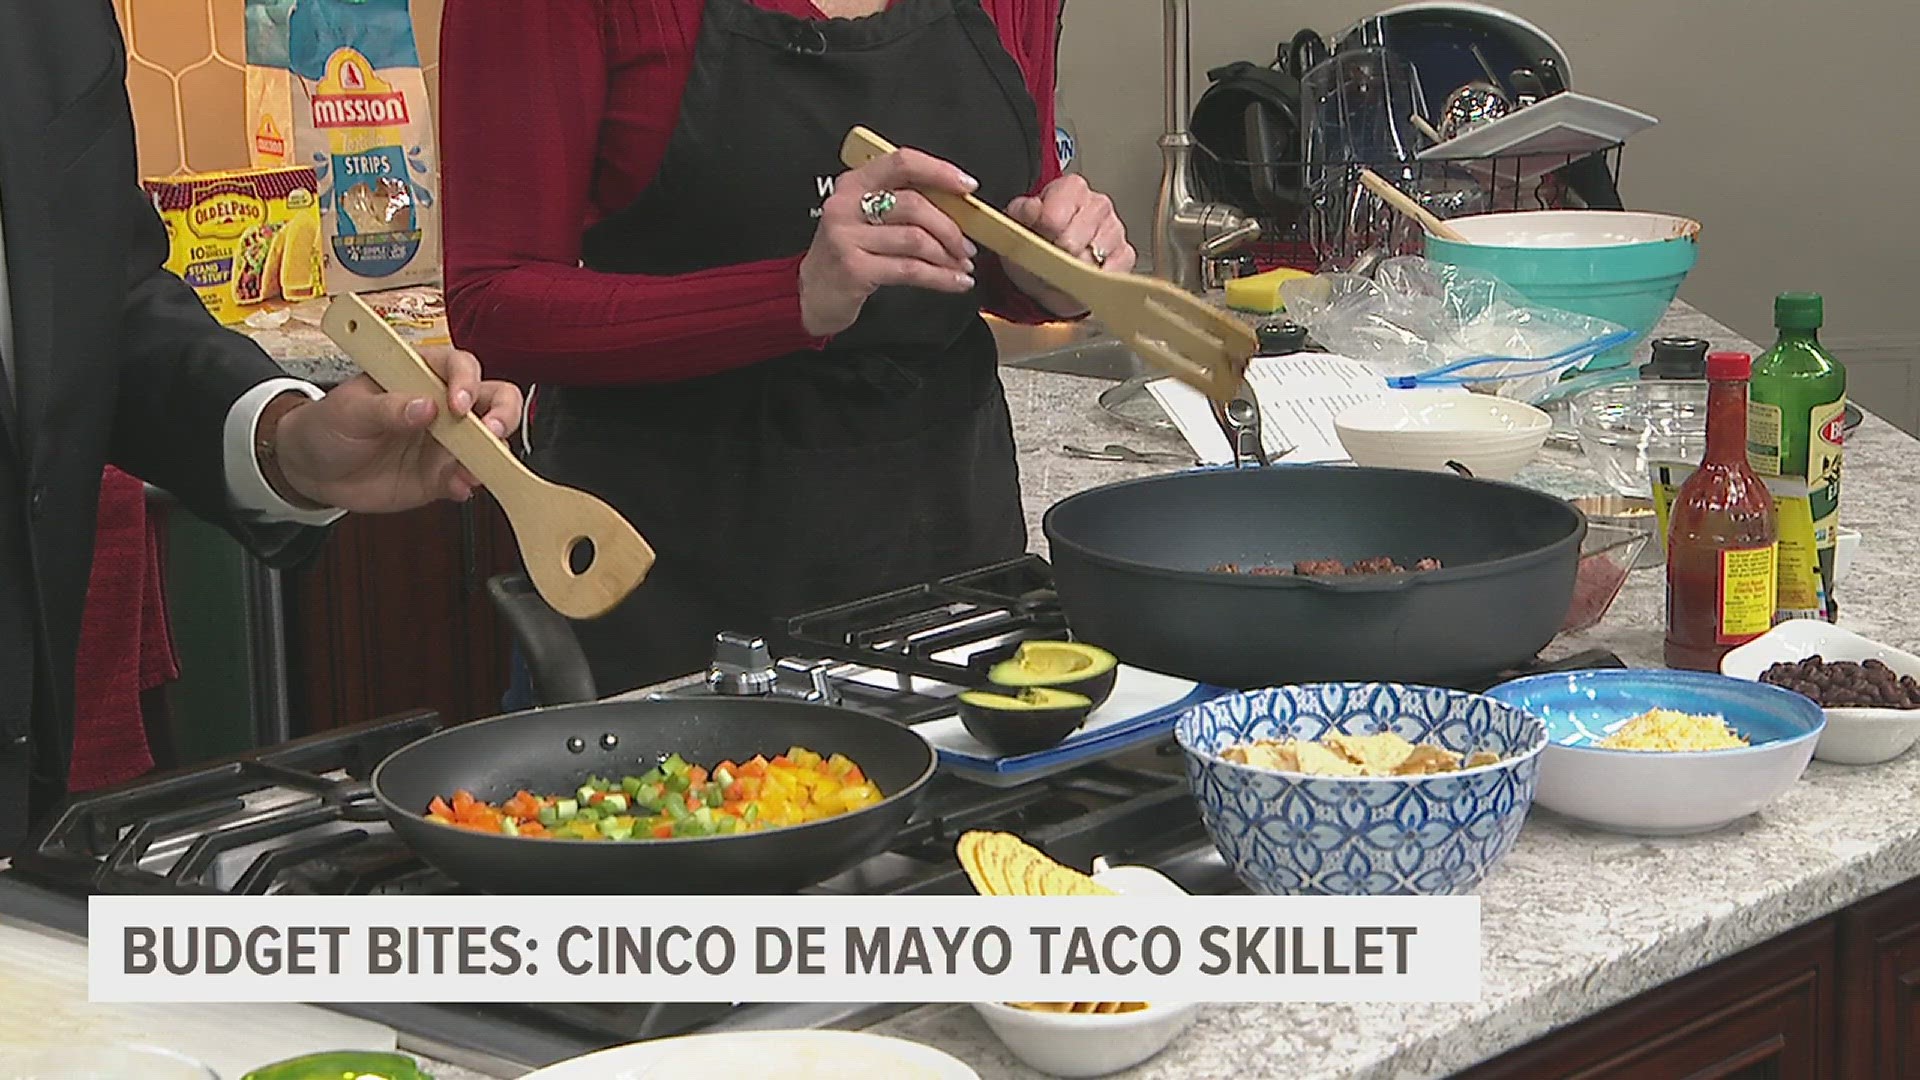 News 8's David Bohlman and Linda Swinford cook up a Cinco de Mayo meal on a budget.